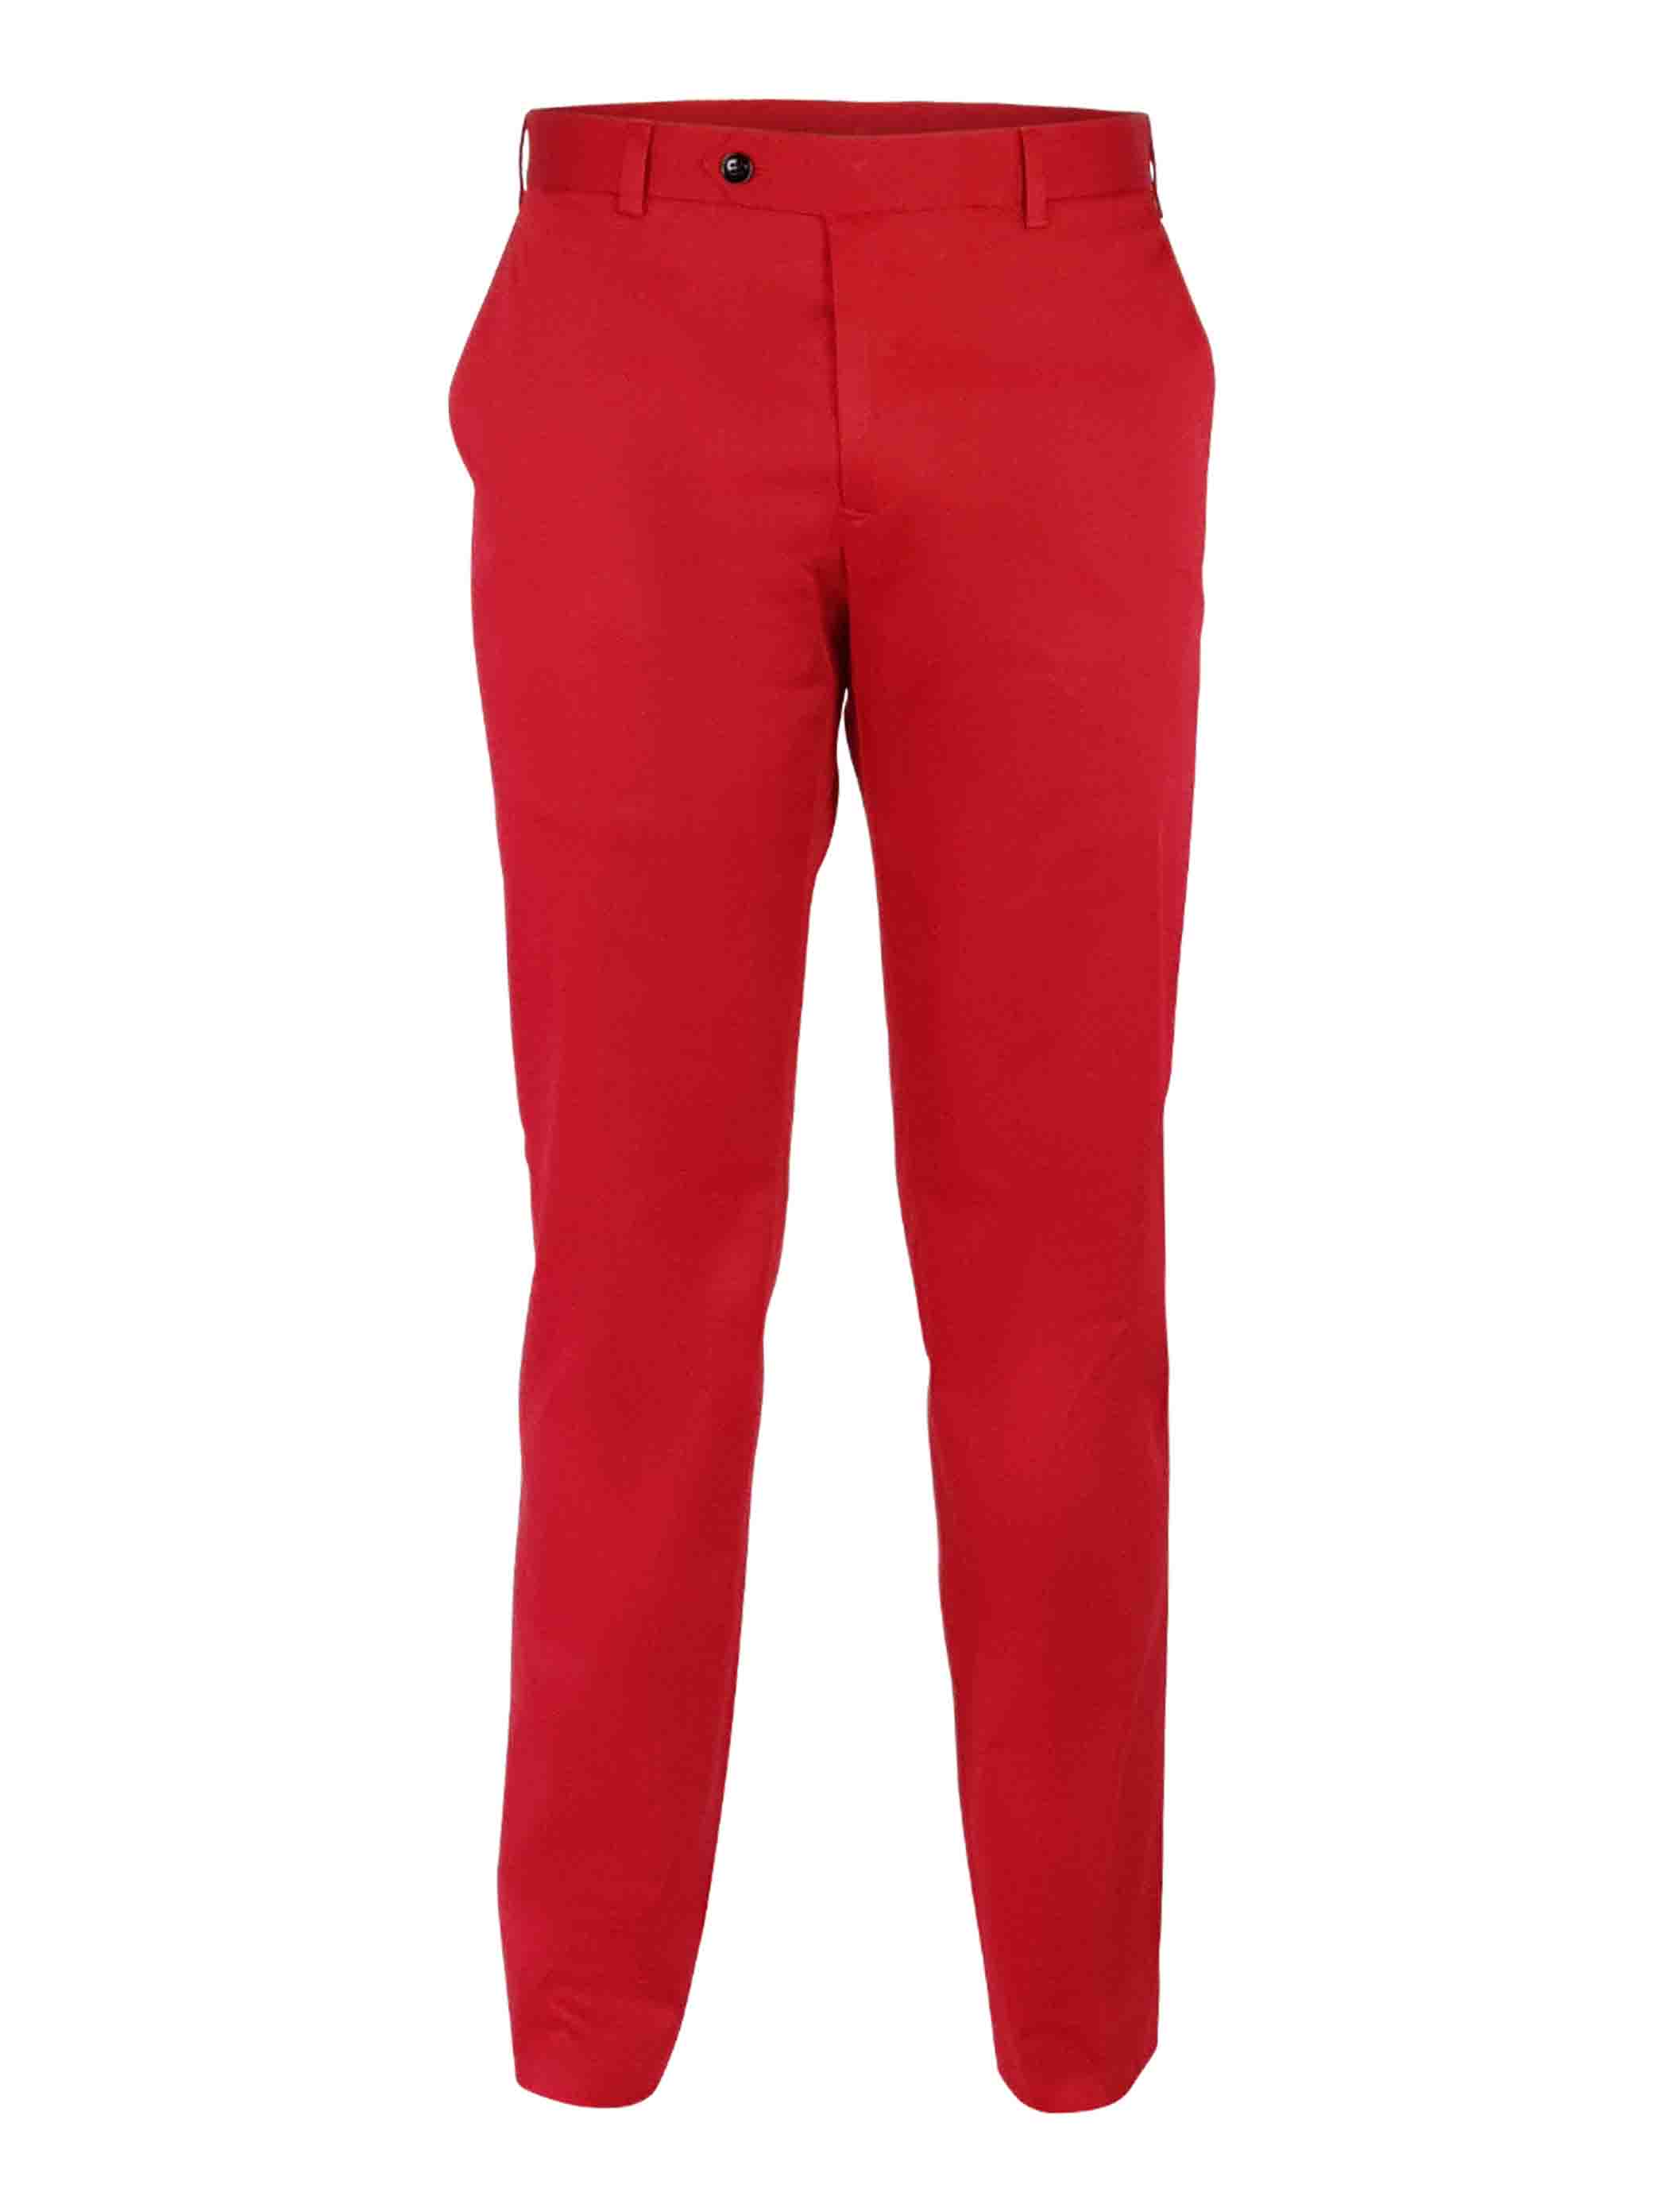 Men's Custom Chino - Red - Uniform Edit